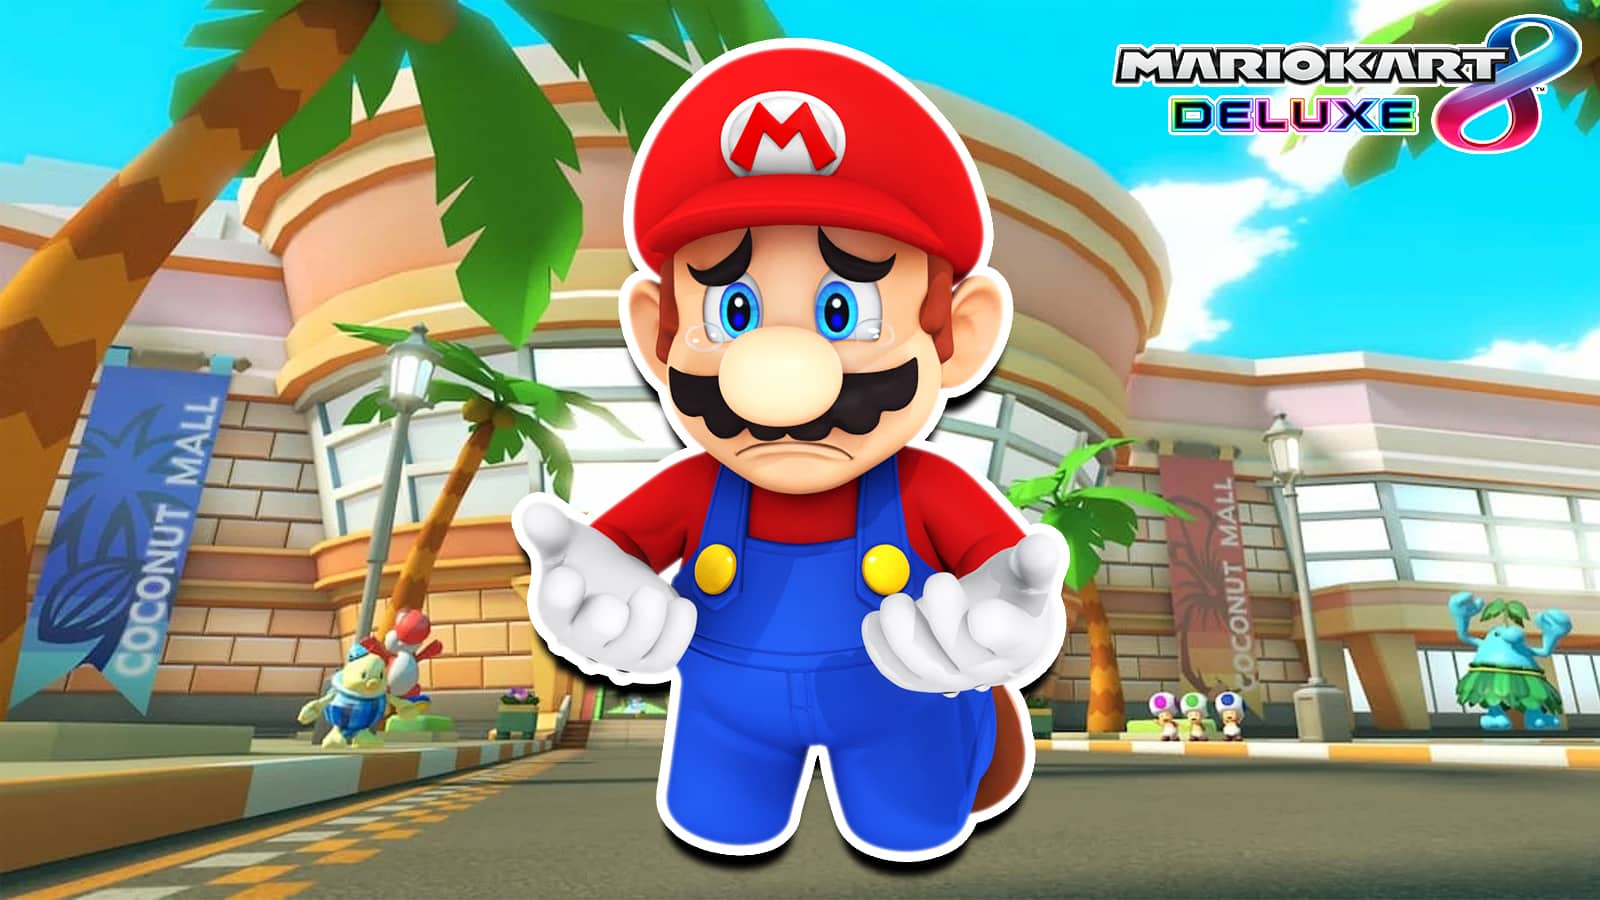 Nintendo Direct was amazing!! New Mario Kart content, Wii sports